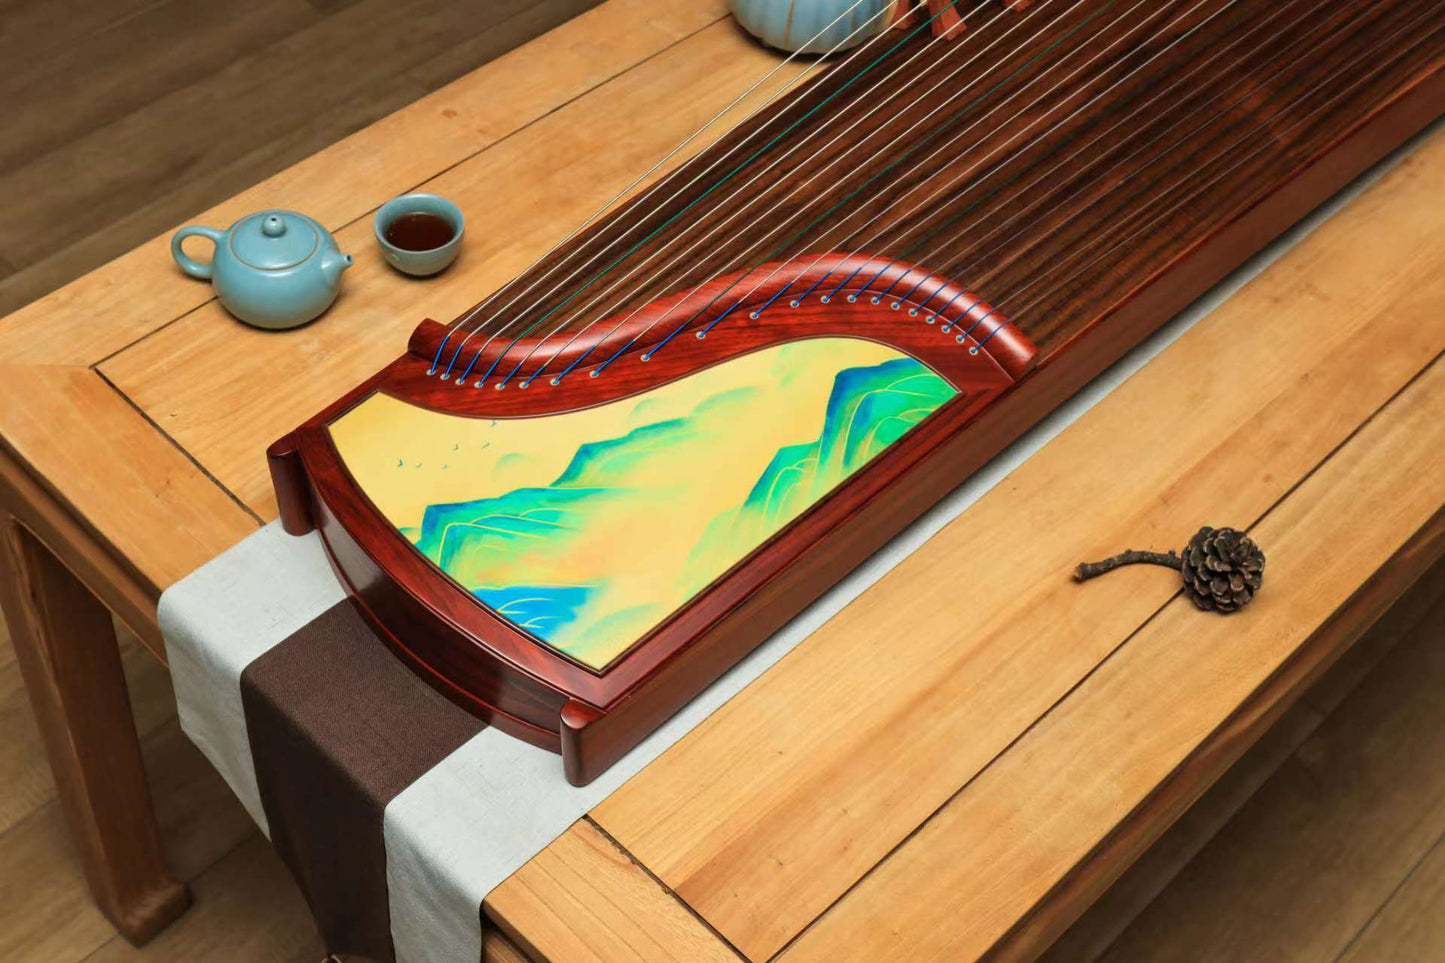 Best guzheng brands, buy guzheng with free shipping, 163 guzheng, full-size guzheng, top rated guzheng, quality guzheng, premium guzheng, 木曰古筝，海外古筝乐器店，古筝琴行，163标准古筝，品质古筝，海外买古筝，高性价比古筝